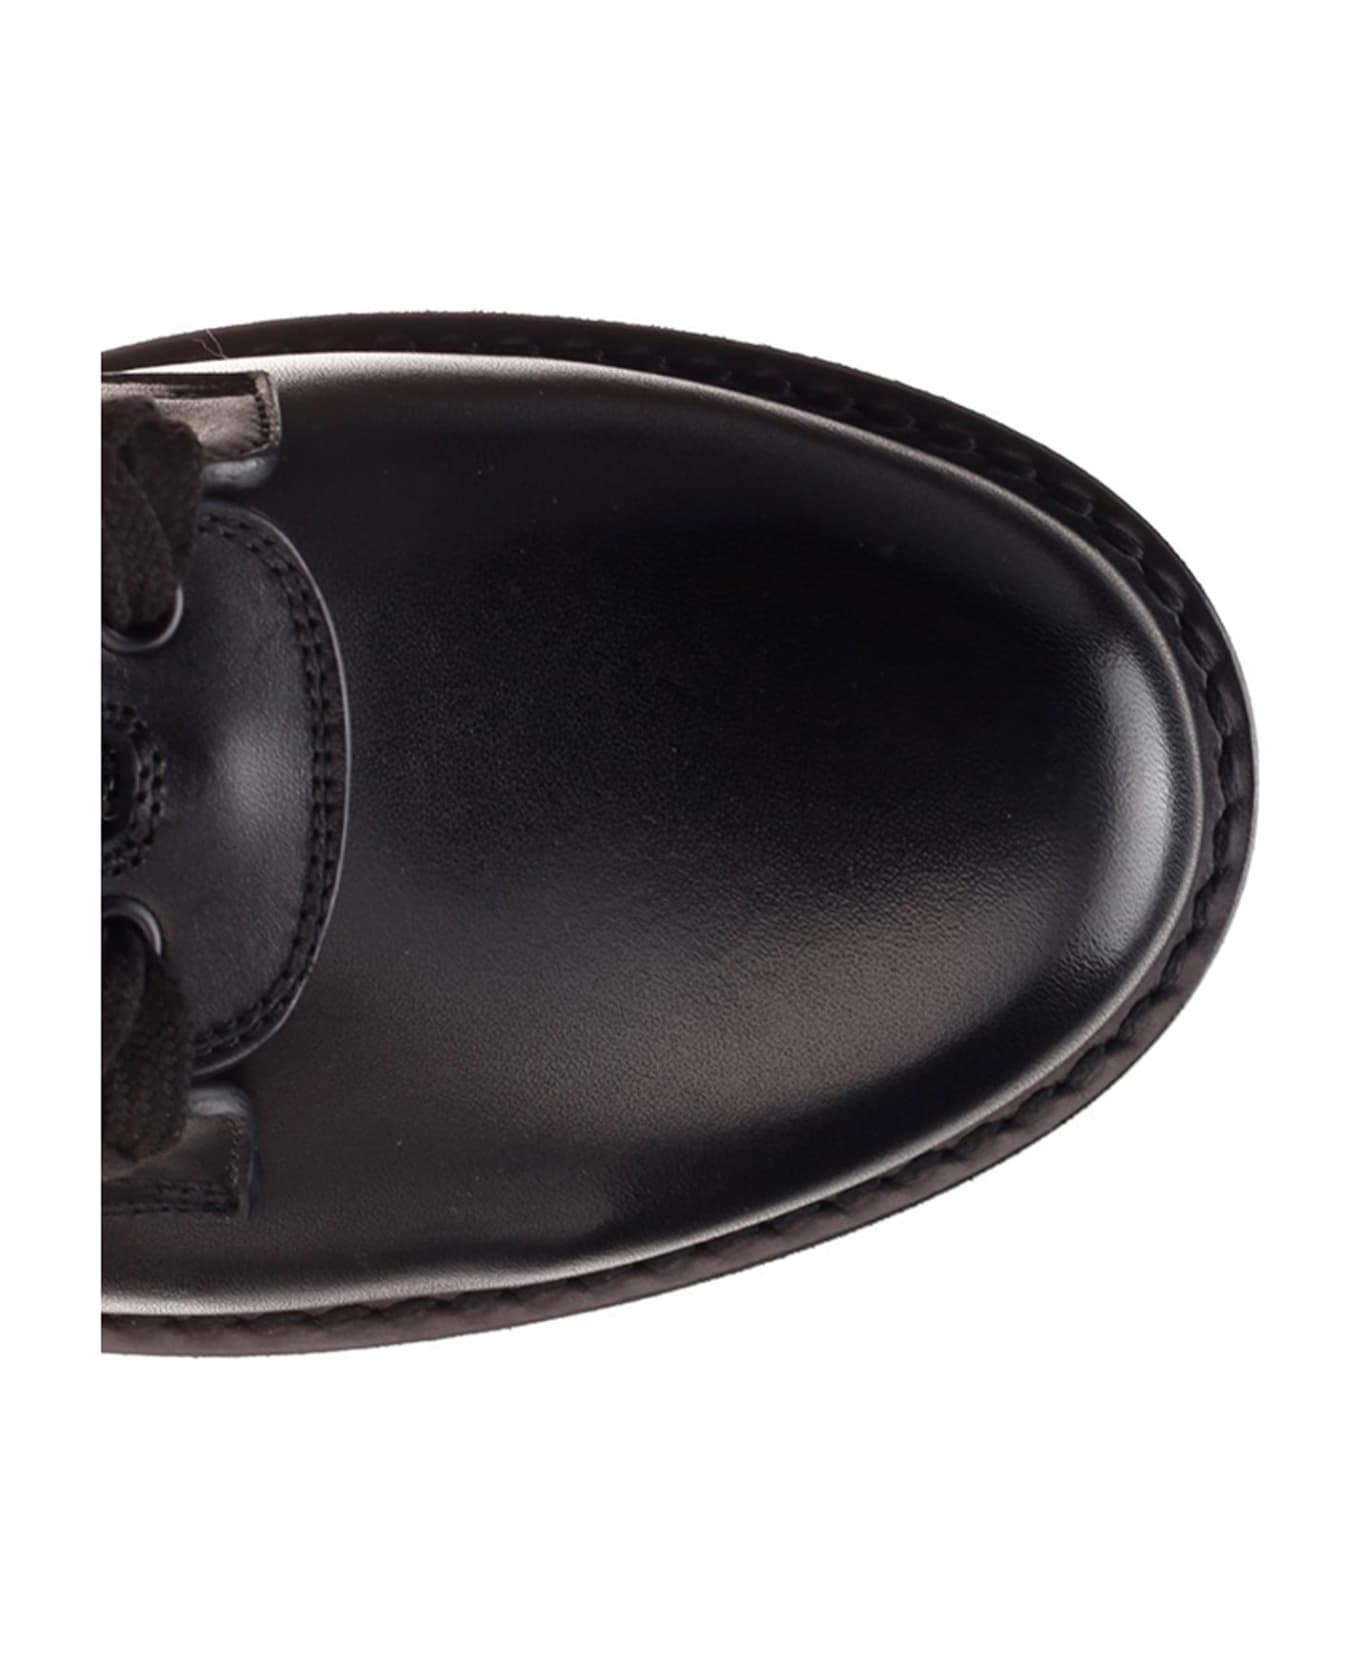 Valentino Garavani Garavani Combat Leather Boots - Black